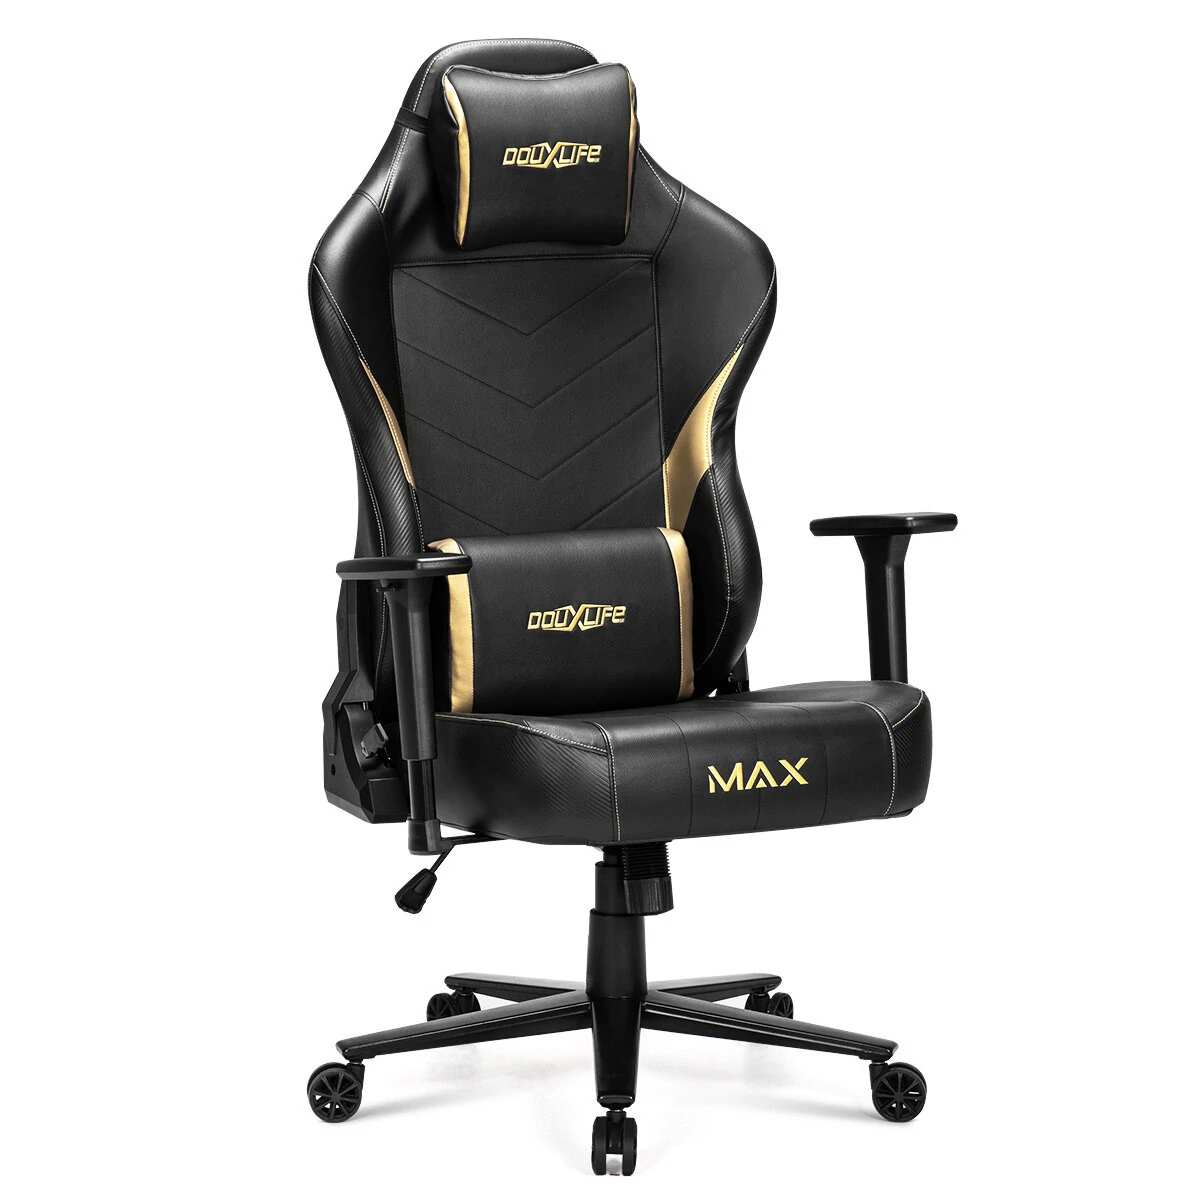 Douxlife Max Gaming Chair Banggood Coupon Promo Code [US Warehouse]